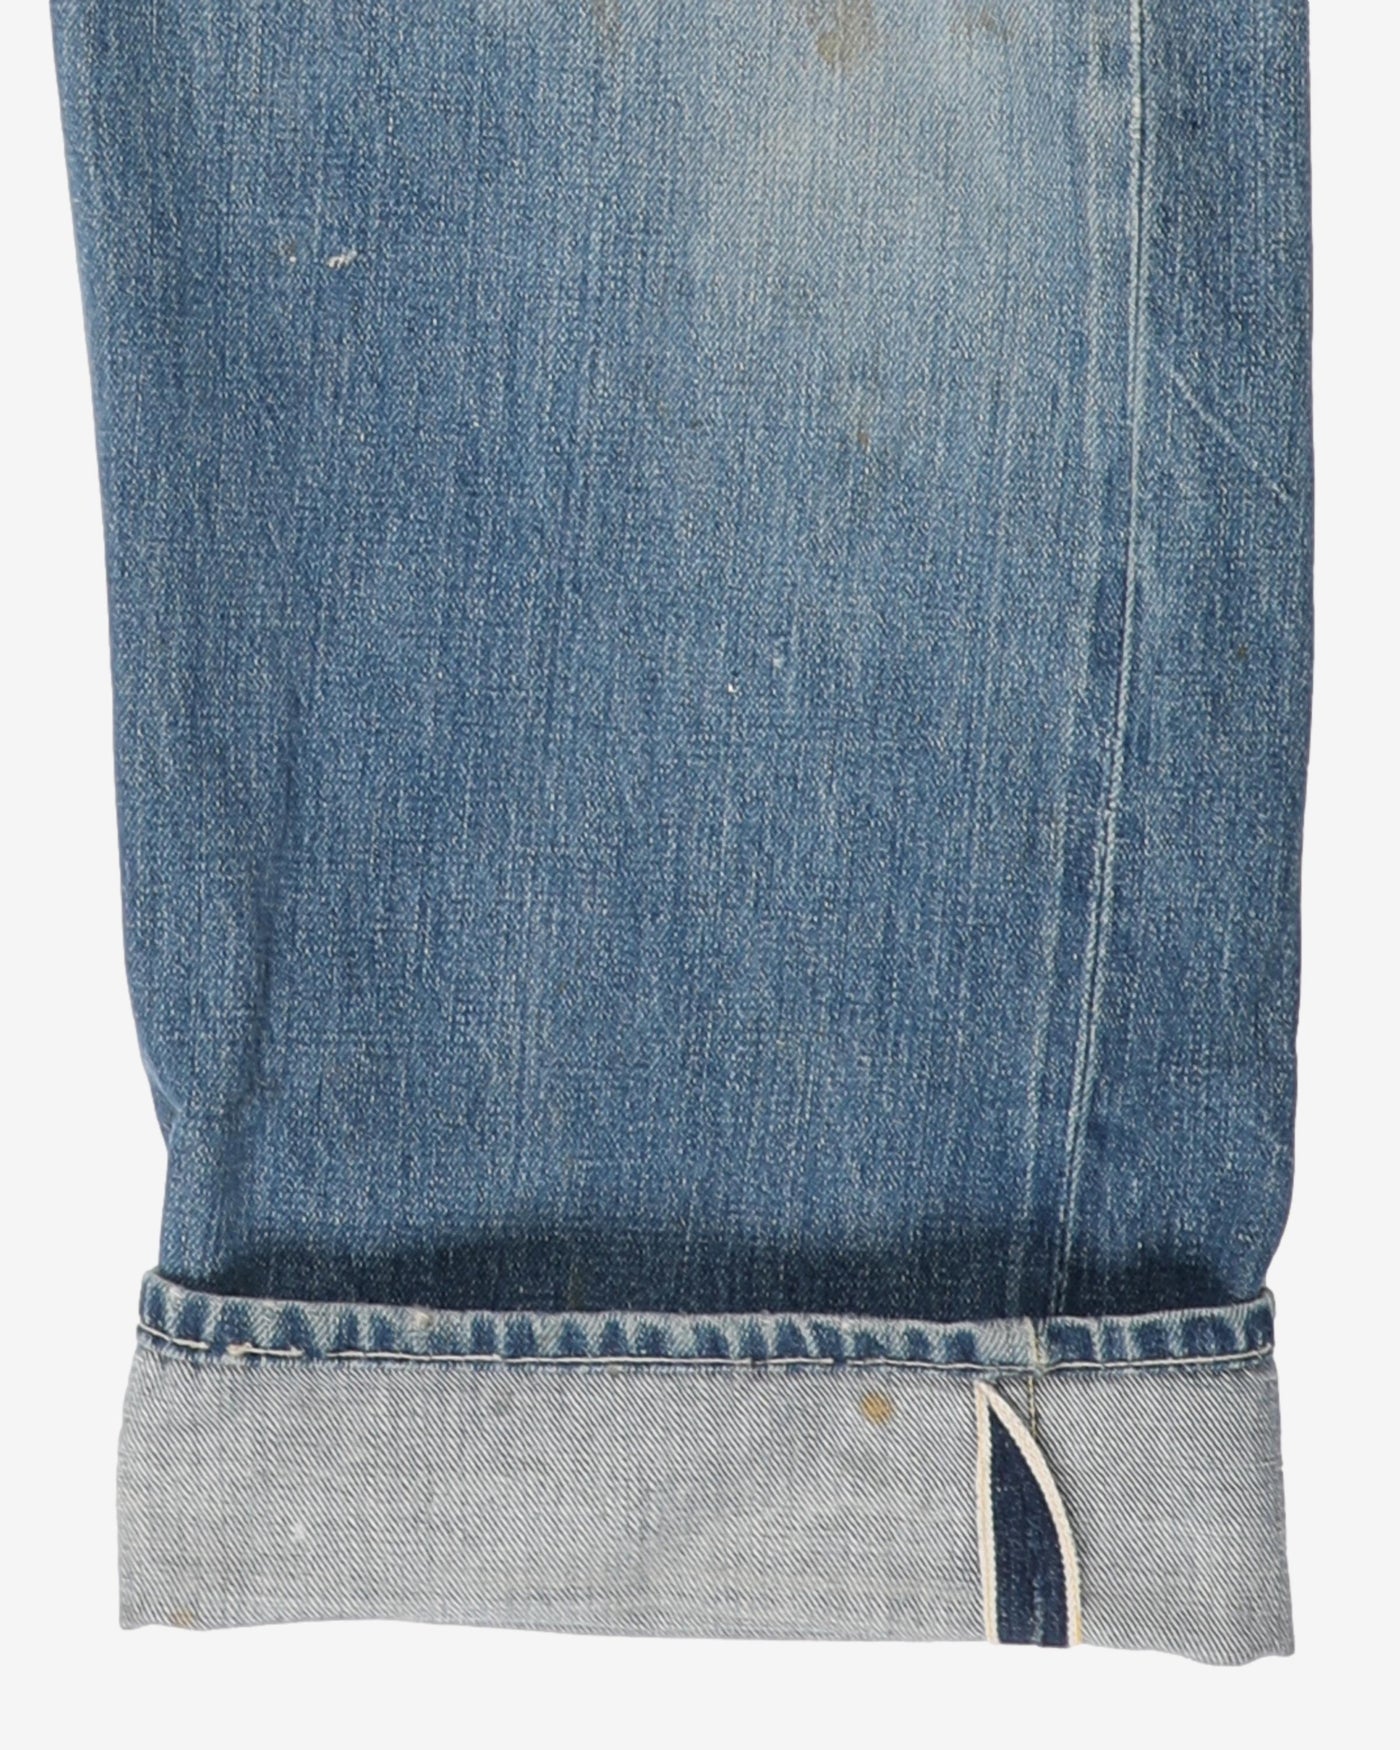 Vintage 1930s JC Penny Selvedge Jeans - W36 L29